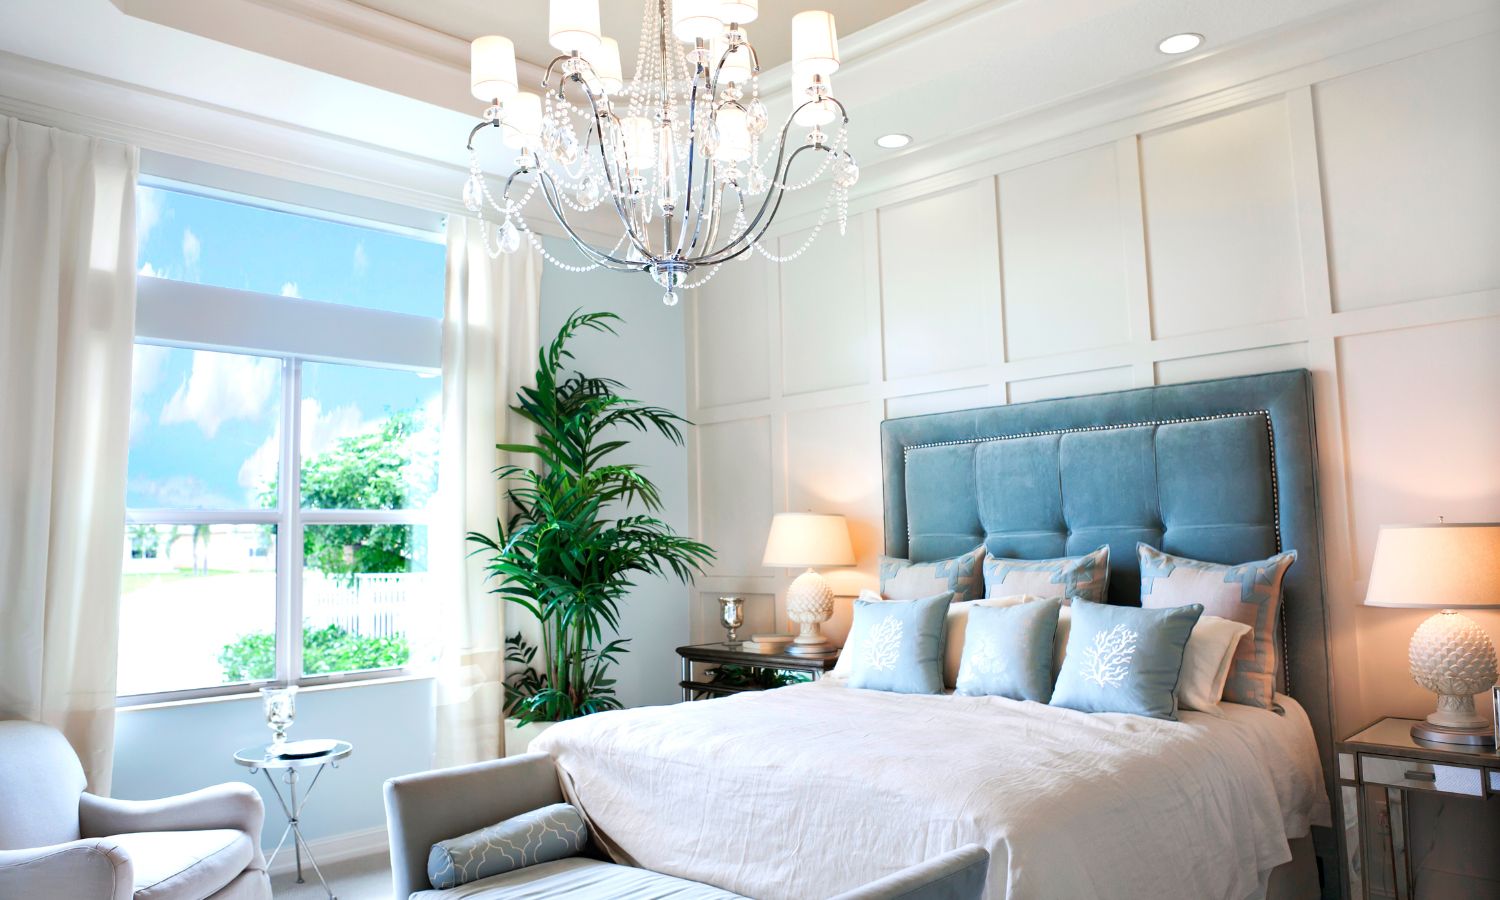 11 Coastal Bedroom Ideas to inspire Your Room Refresh